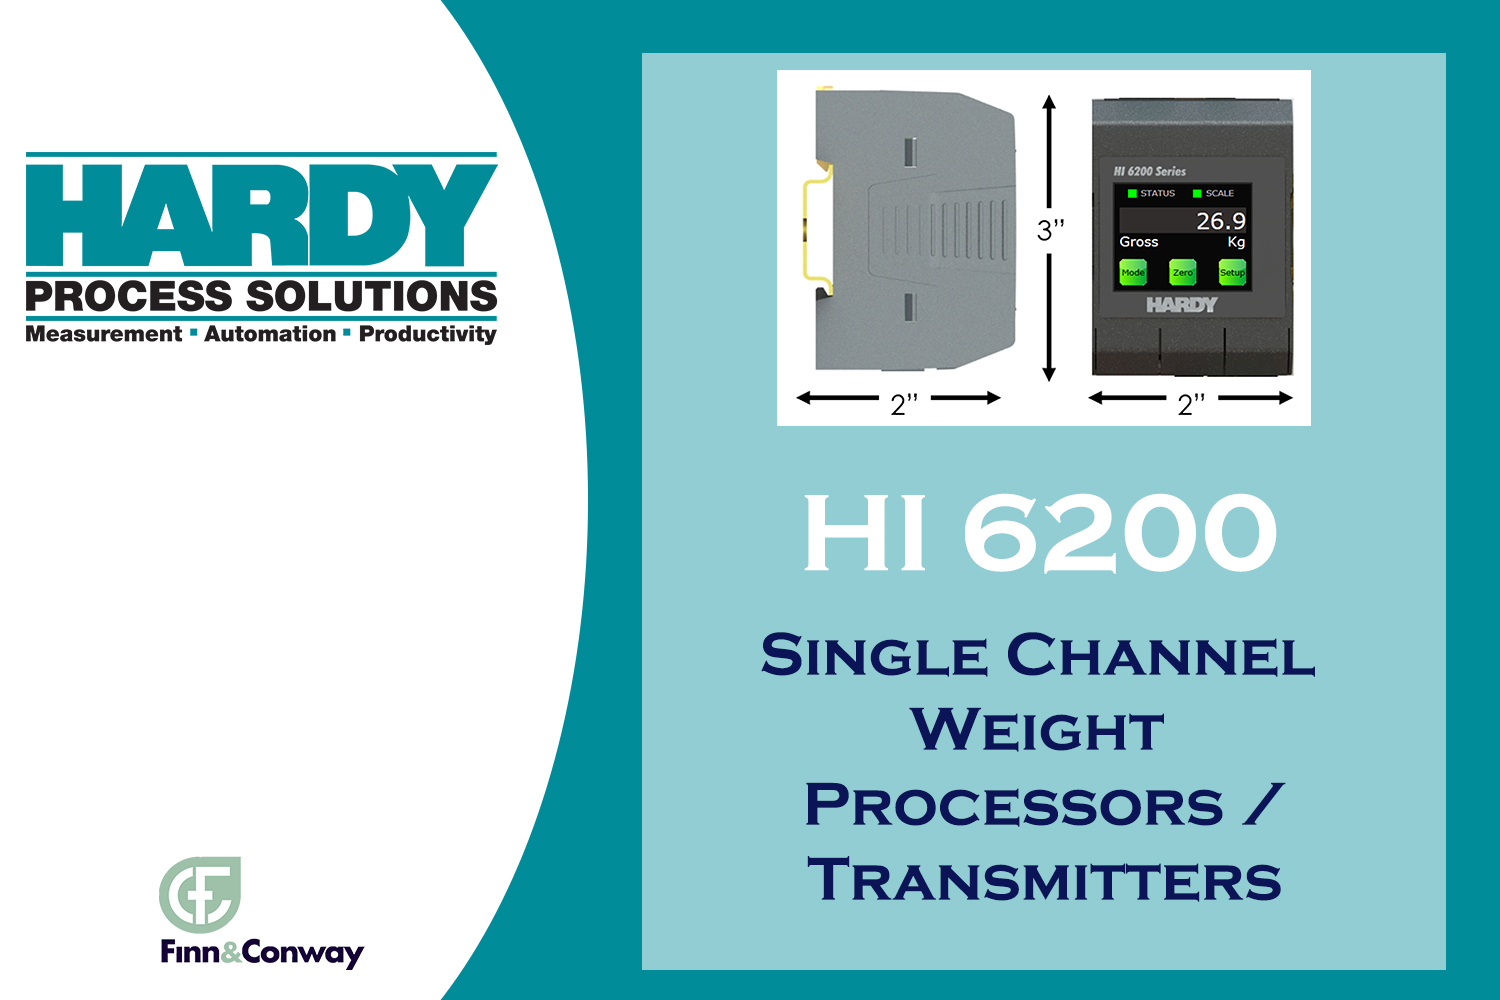 HI 6200 SINGLE CHANNEL PROCESSOR by Hardy Process